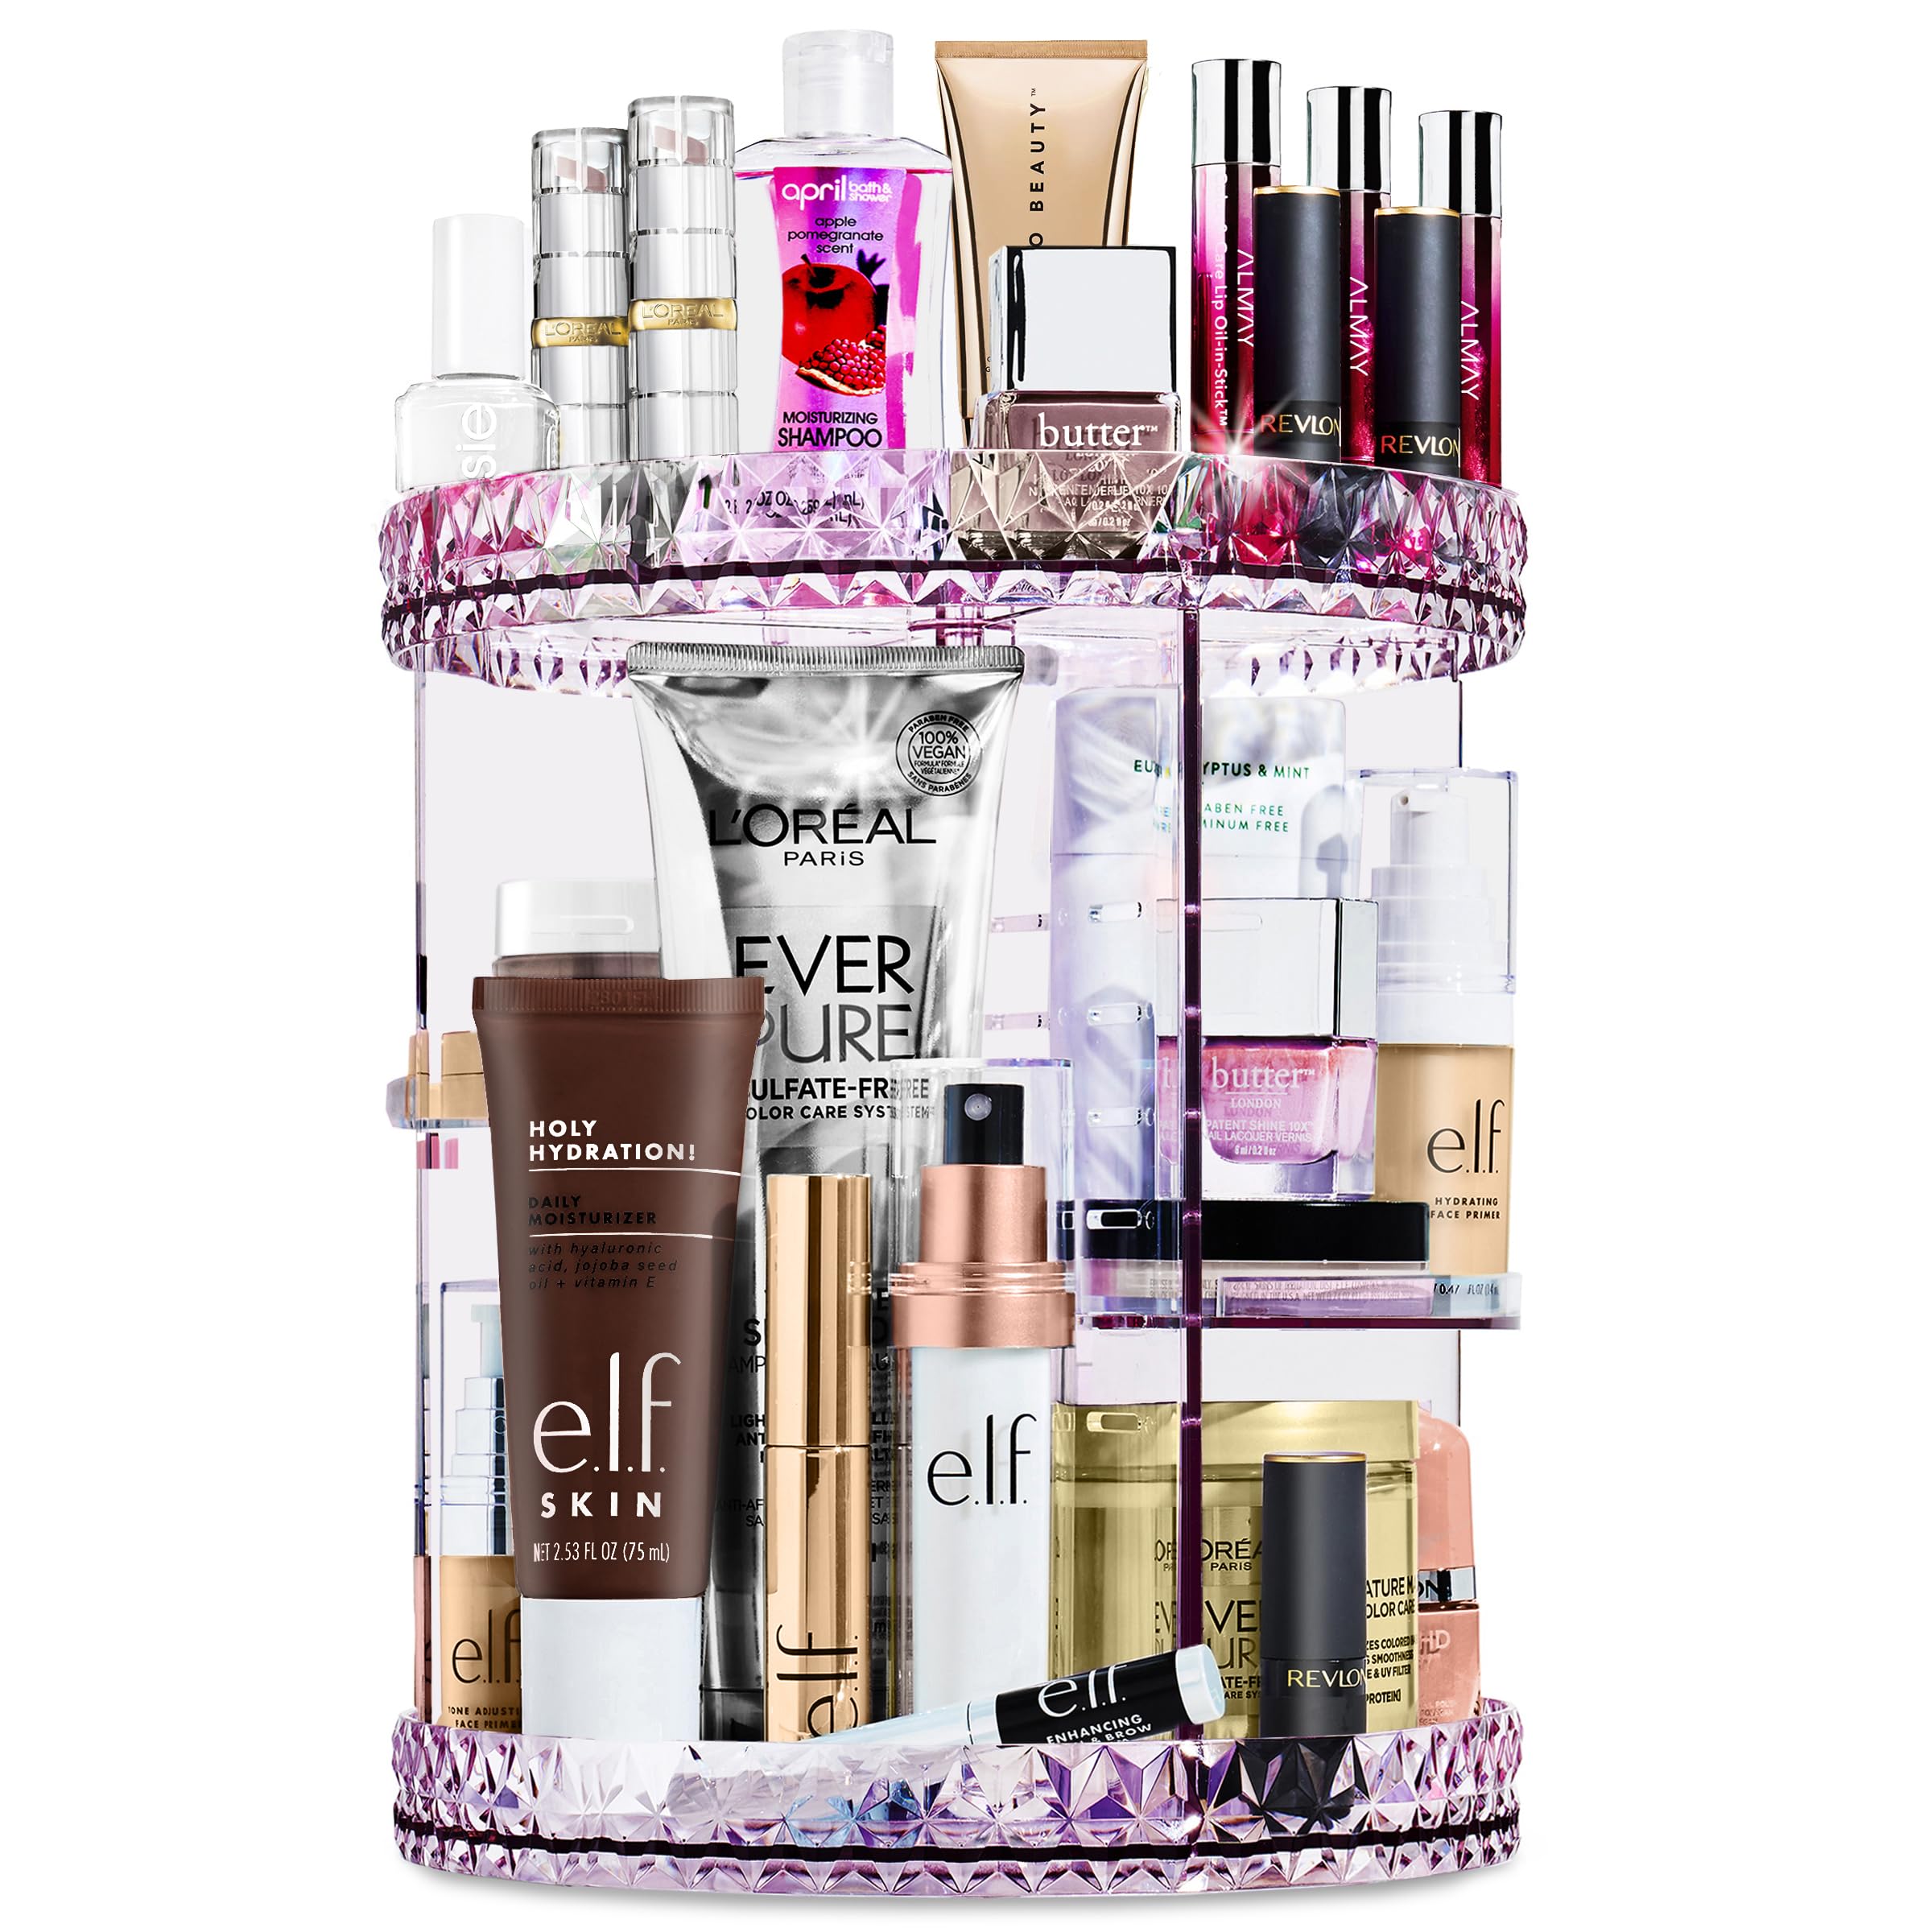 Sorbus 360 Rotating Makeup Organizer - Spinning cosmetics organizer, Adjustable Shelves for Make Up, Perfume & Toiletries - Acrylic Makeup Organizer for Vanity, Bathroom, Bedroom, Closet [Purple]